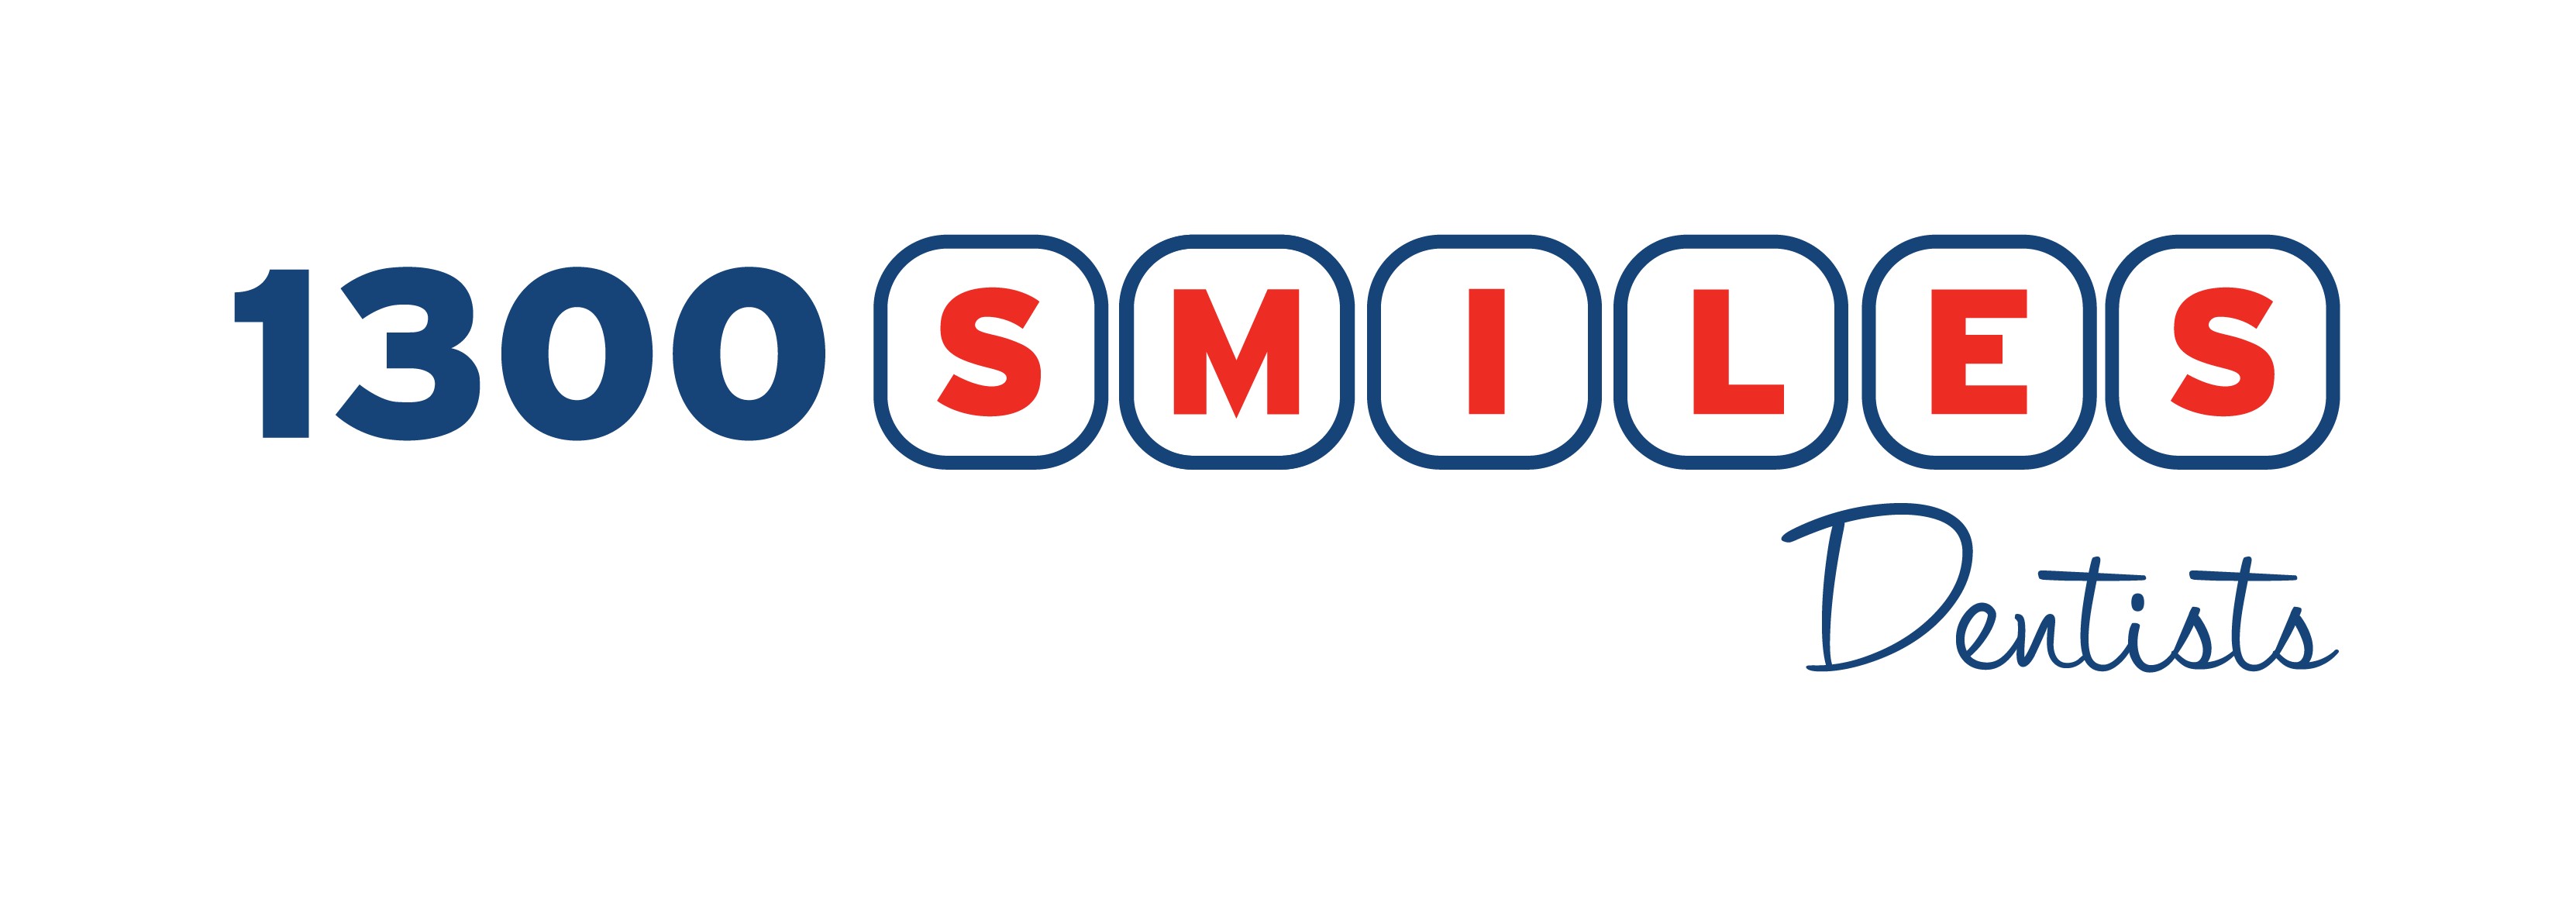 1300 Smiles Dentists 